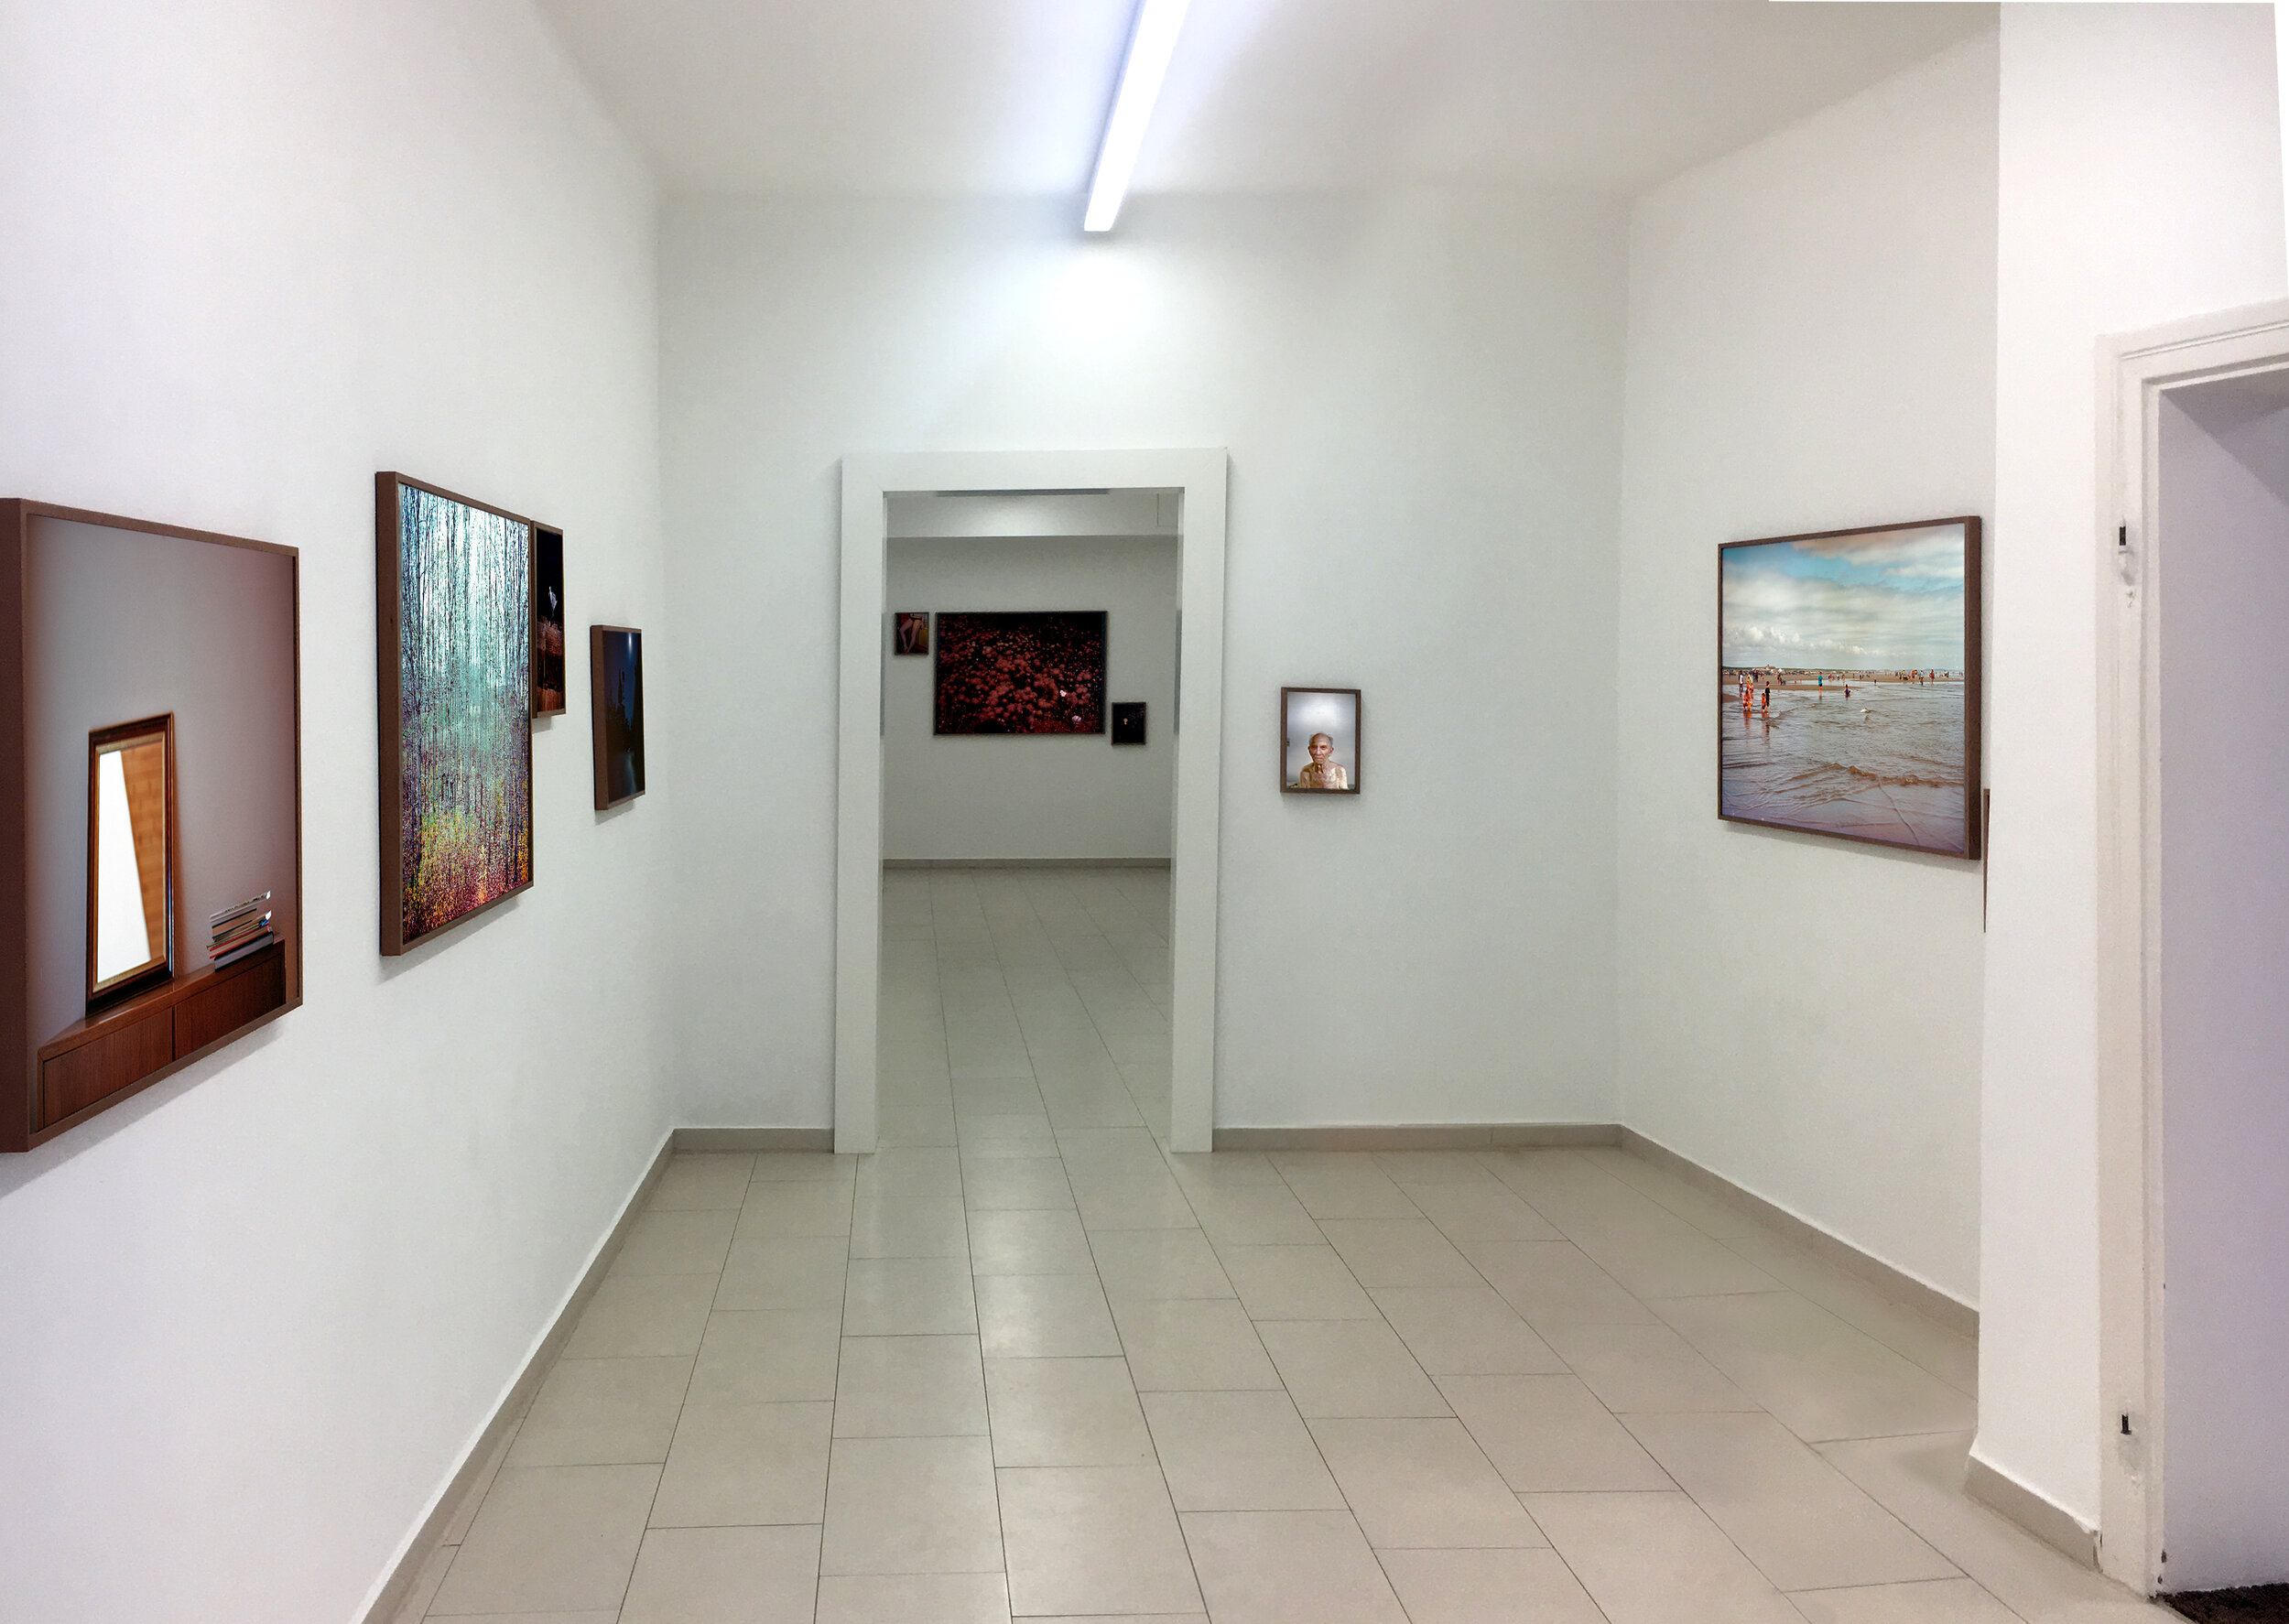  Soiz Galerie Passau, Germany, 2019 curated by Eva Riesinger 